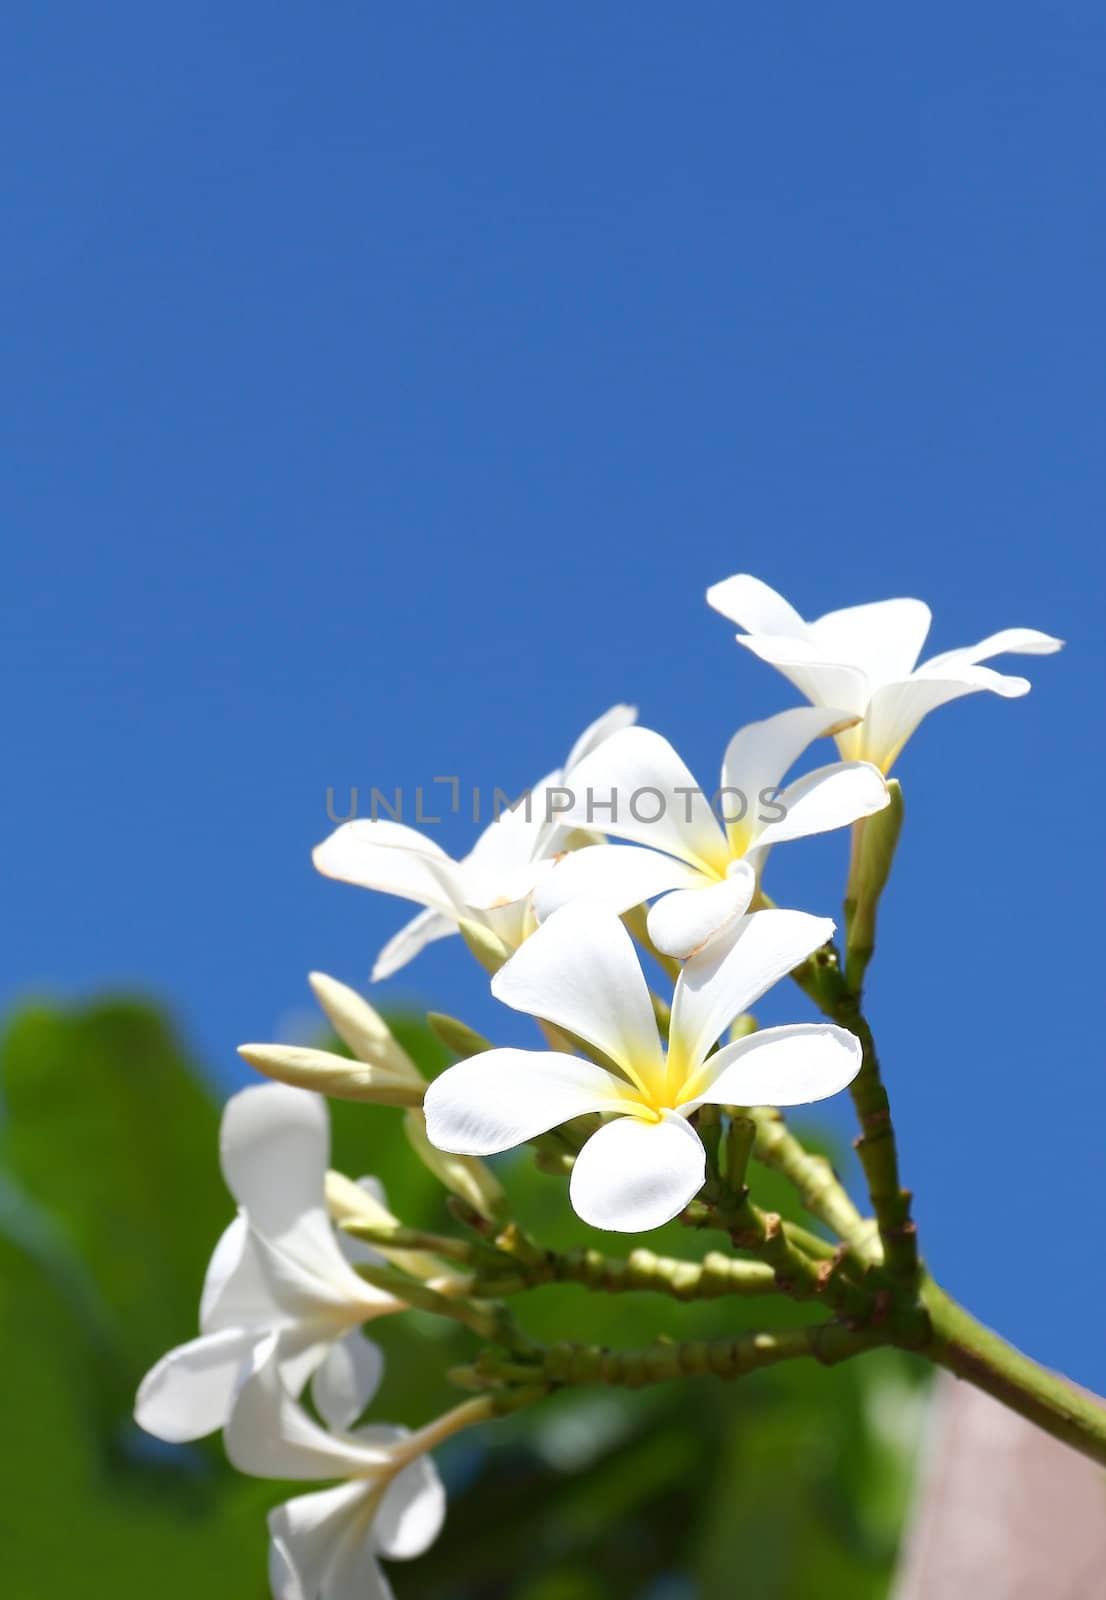 Frangipani (plumeria) flower blooming against the blue sky